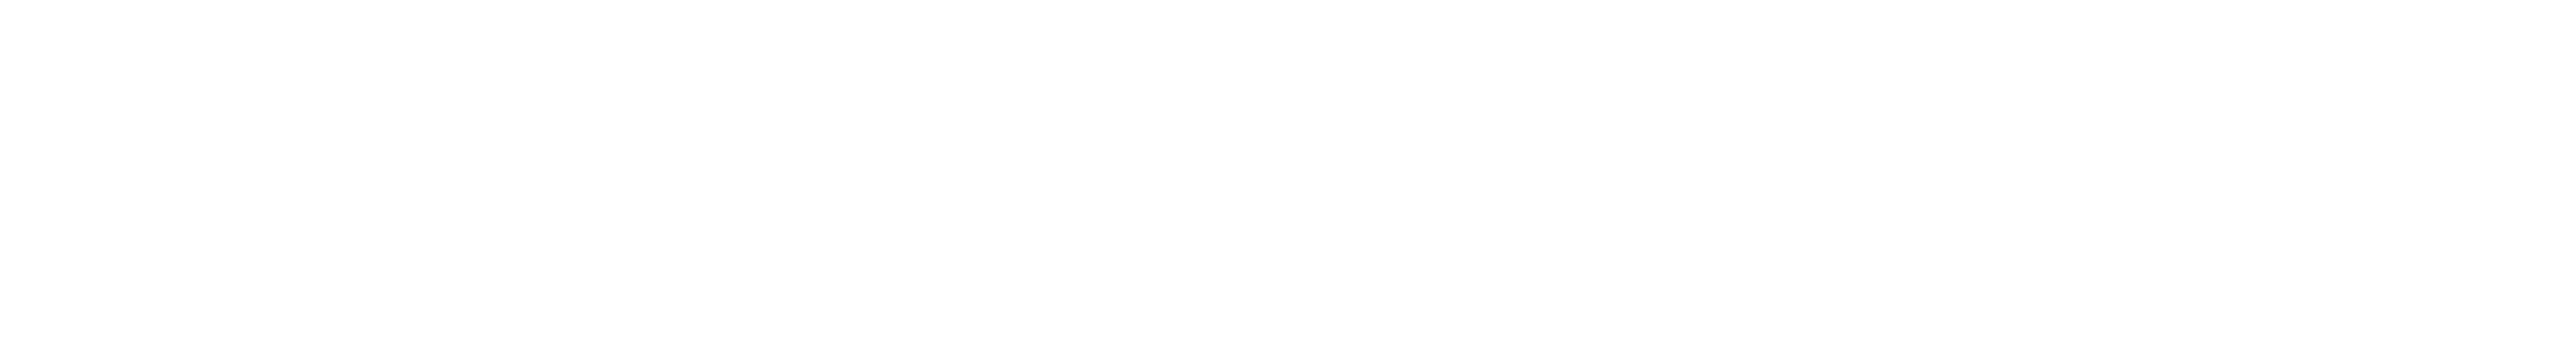 Georgia Senior Medical Group logo